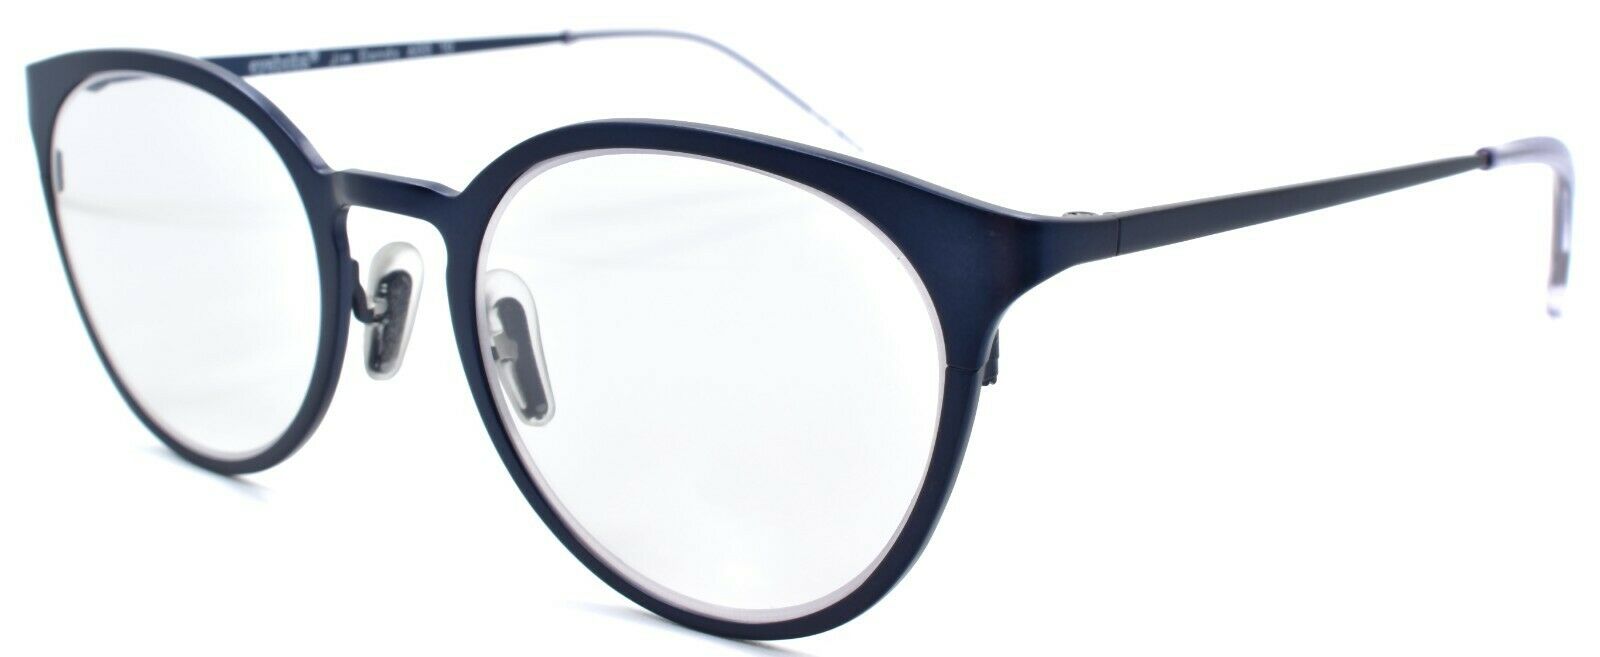 1-Eyebobs Jim Dandy 600 10 Reading Glasses Navy Blue +2.75-842754137867-IKSpecs